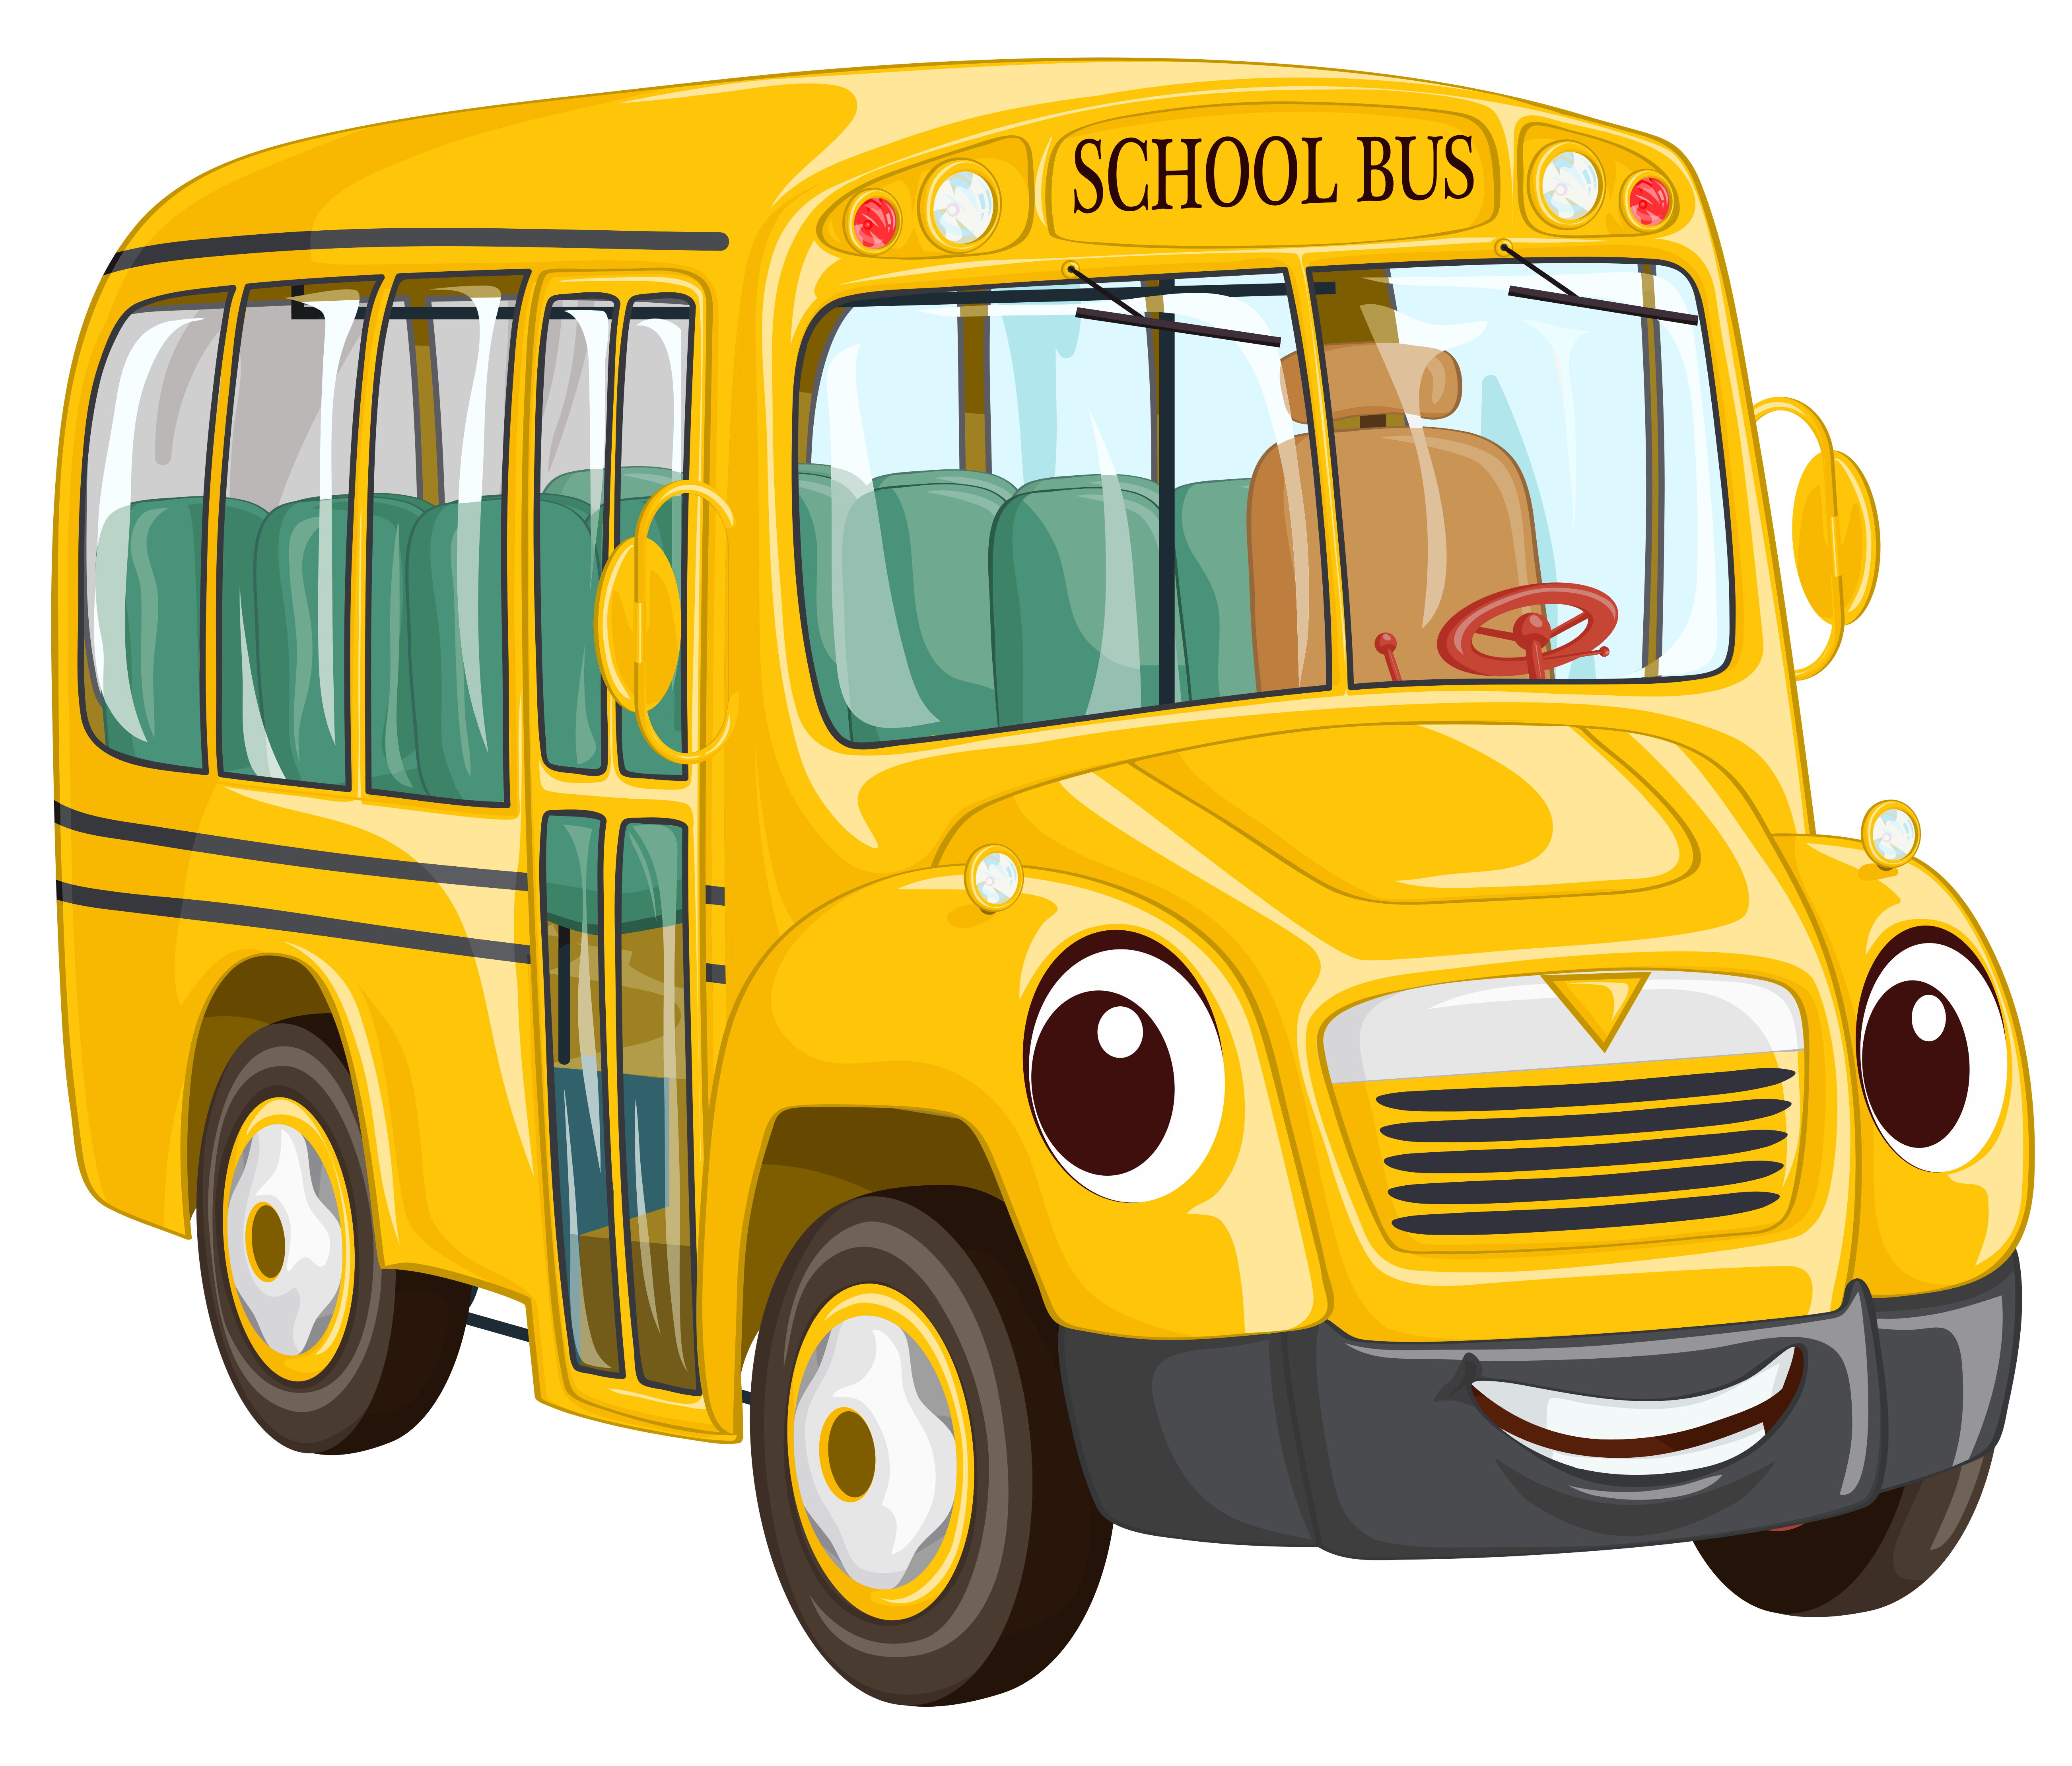 School bus clipart images 3 school bus clip art vector 5 2 clipartix